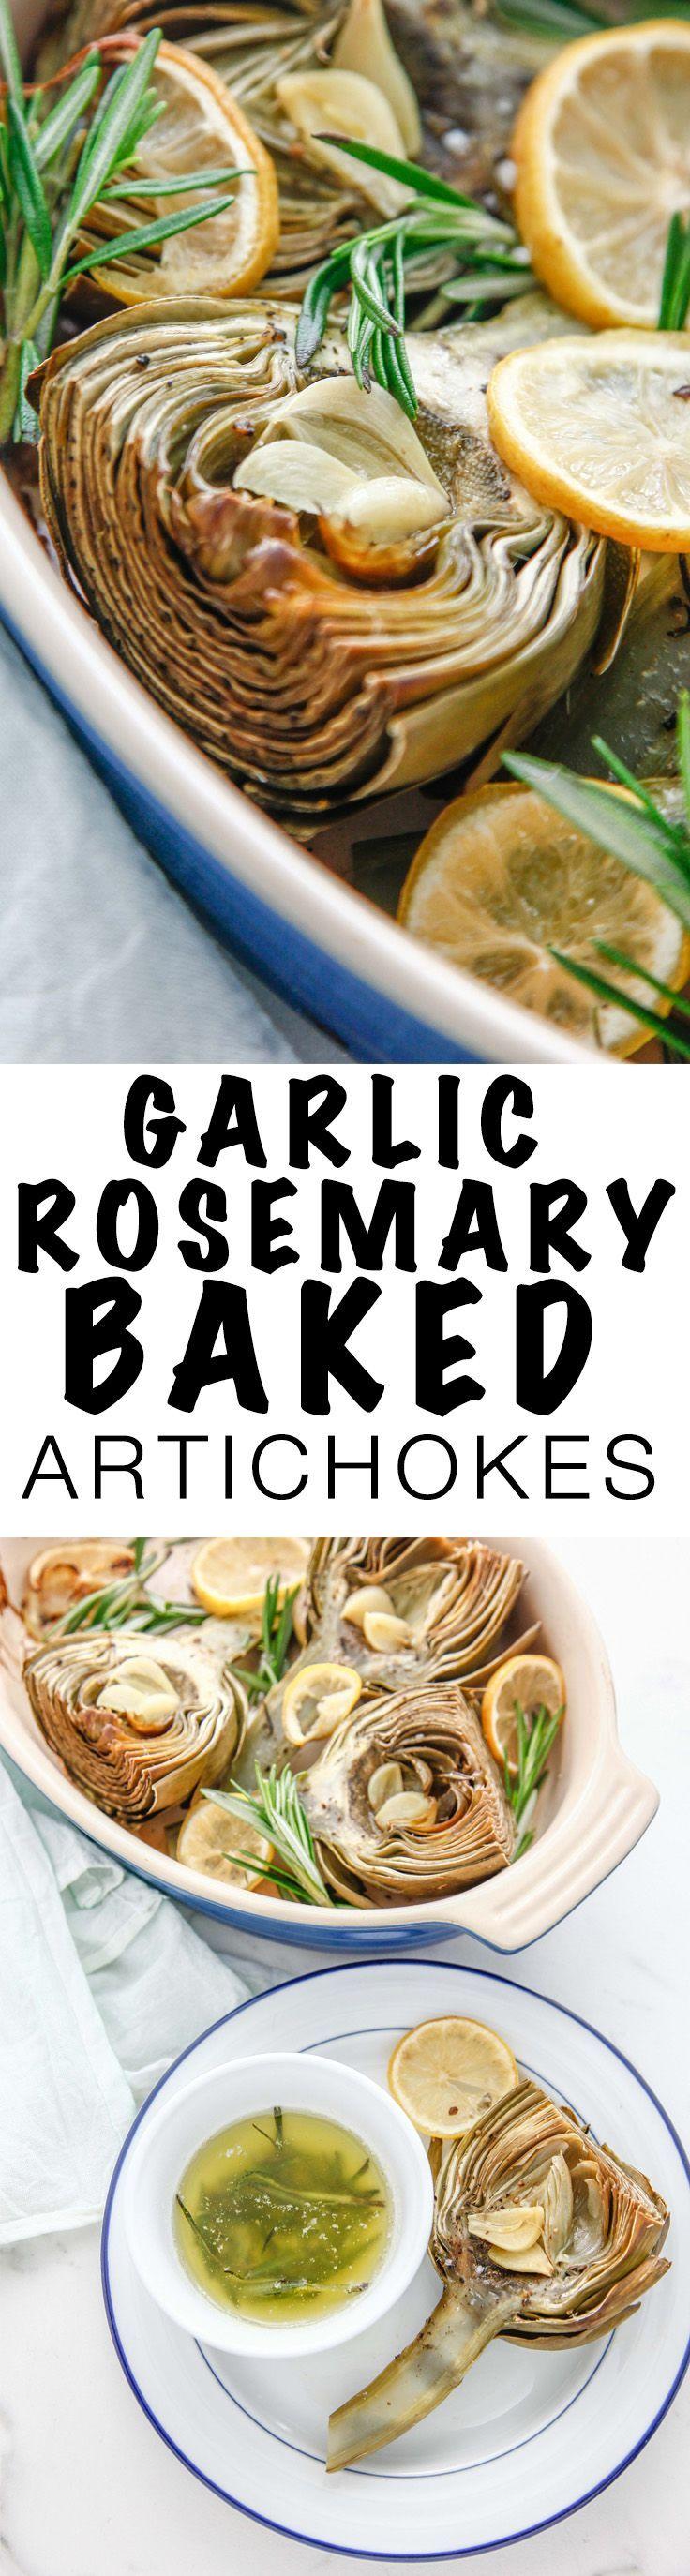 Wedding - Garlic Rosemary Baked Artichokes